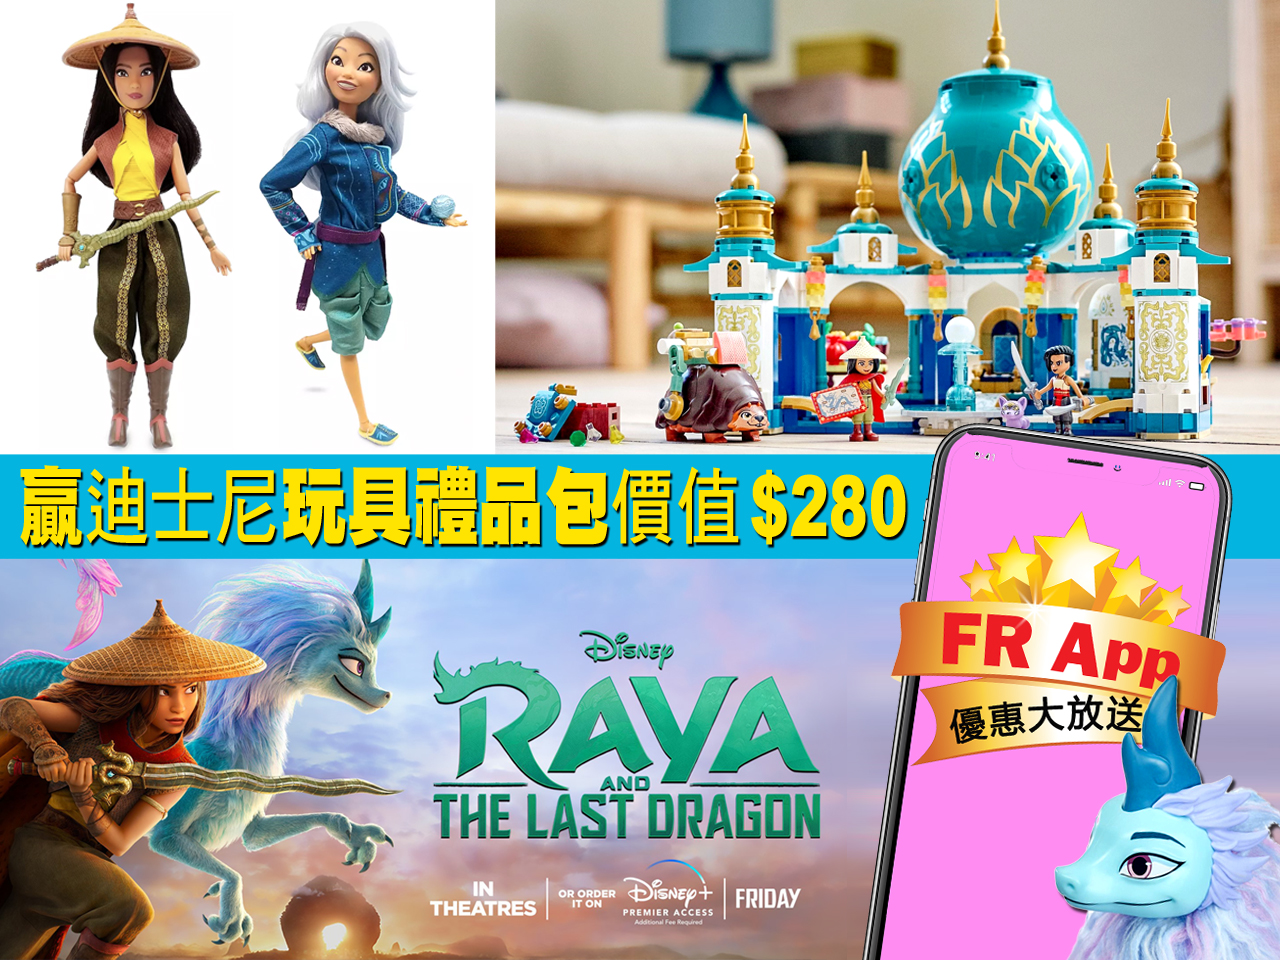 FR App 優惠大放送 贏《Disney's Raya and the Last Dragon》玩具禮物包價值 $280 [得獎名單公佈]